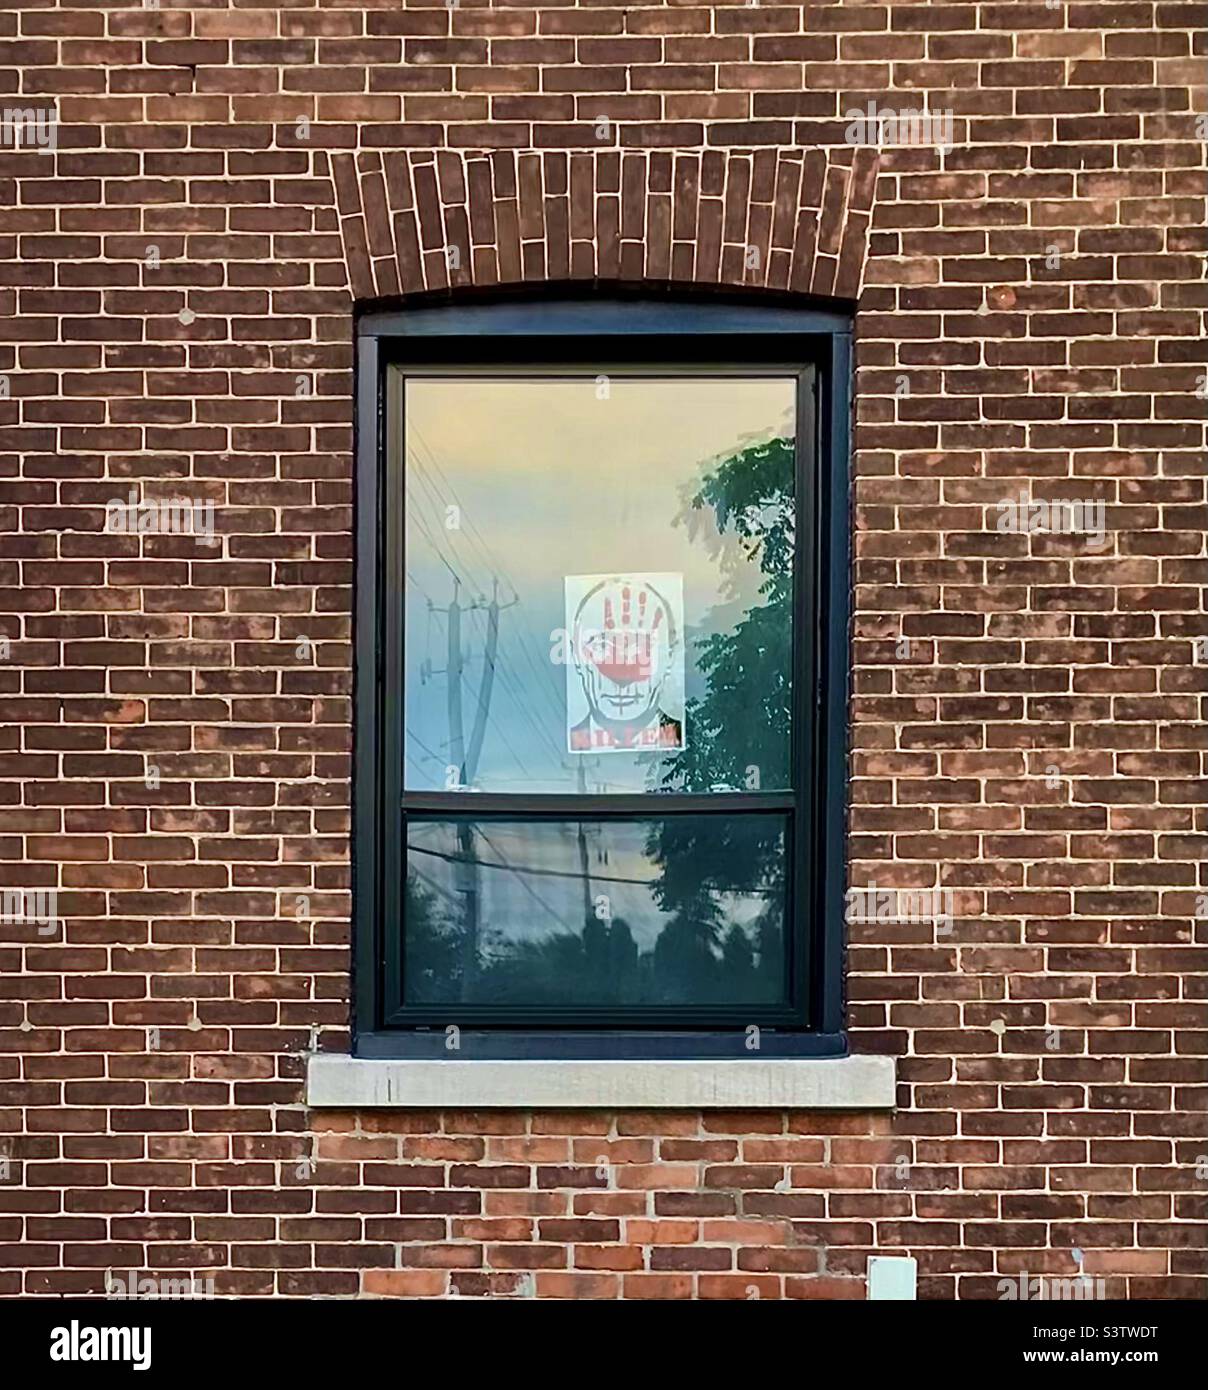 Anti-Putin poster in brick house window. Stock Photo